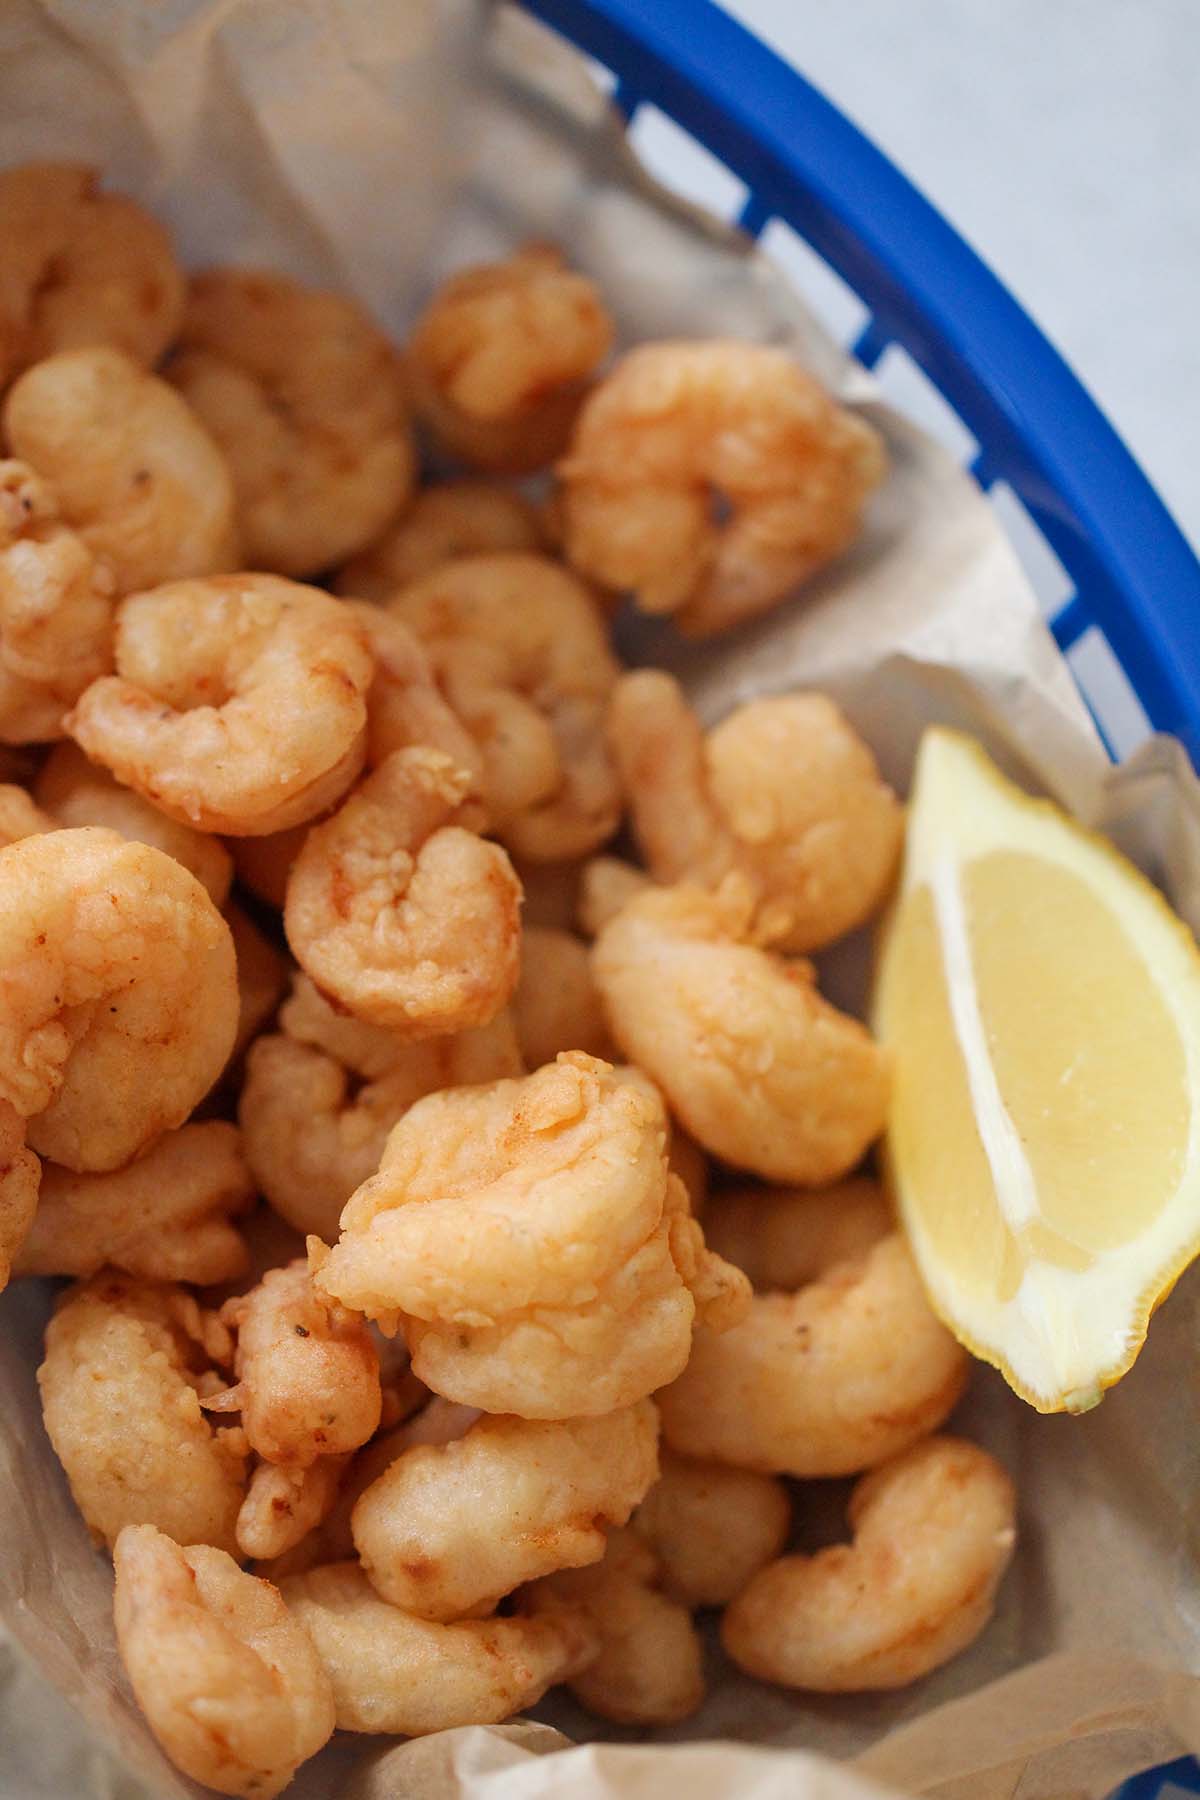 Popcorn shrimp in a blue basket with a lemon wedge on the side. 